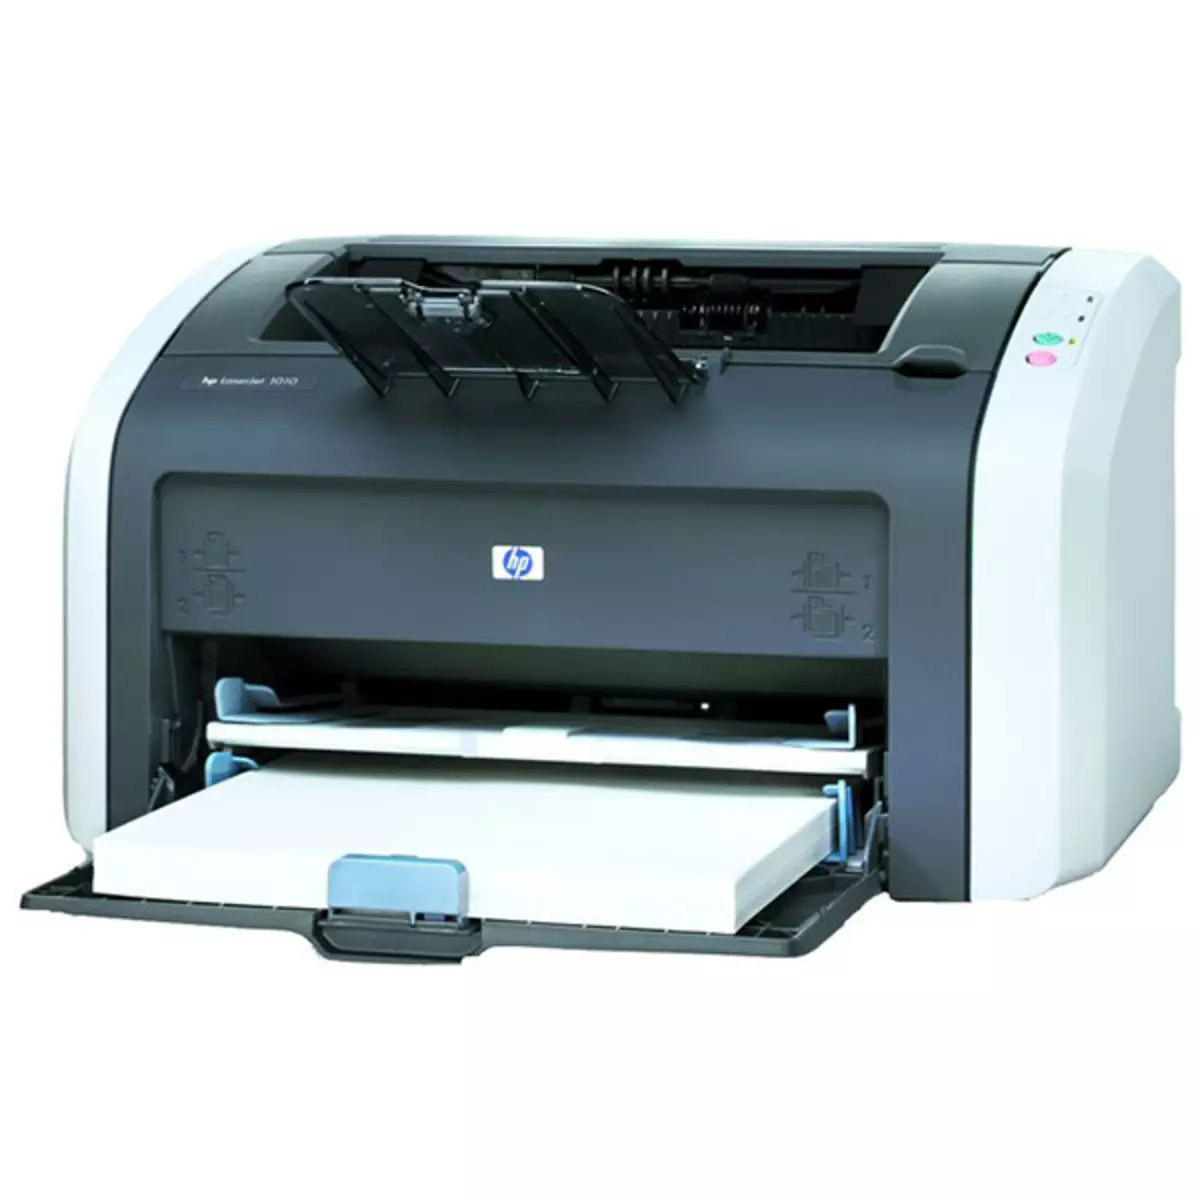 Download HP LaserJet 1010 Driver Printer